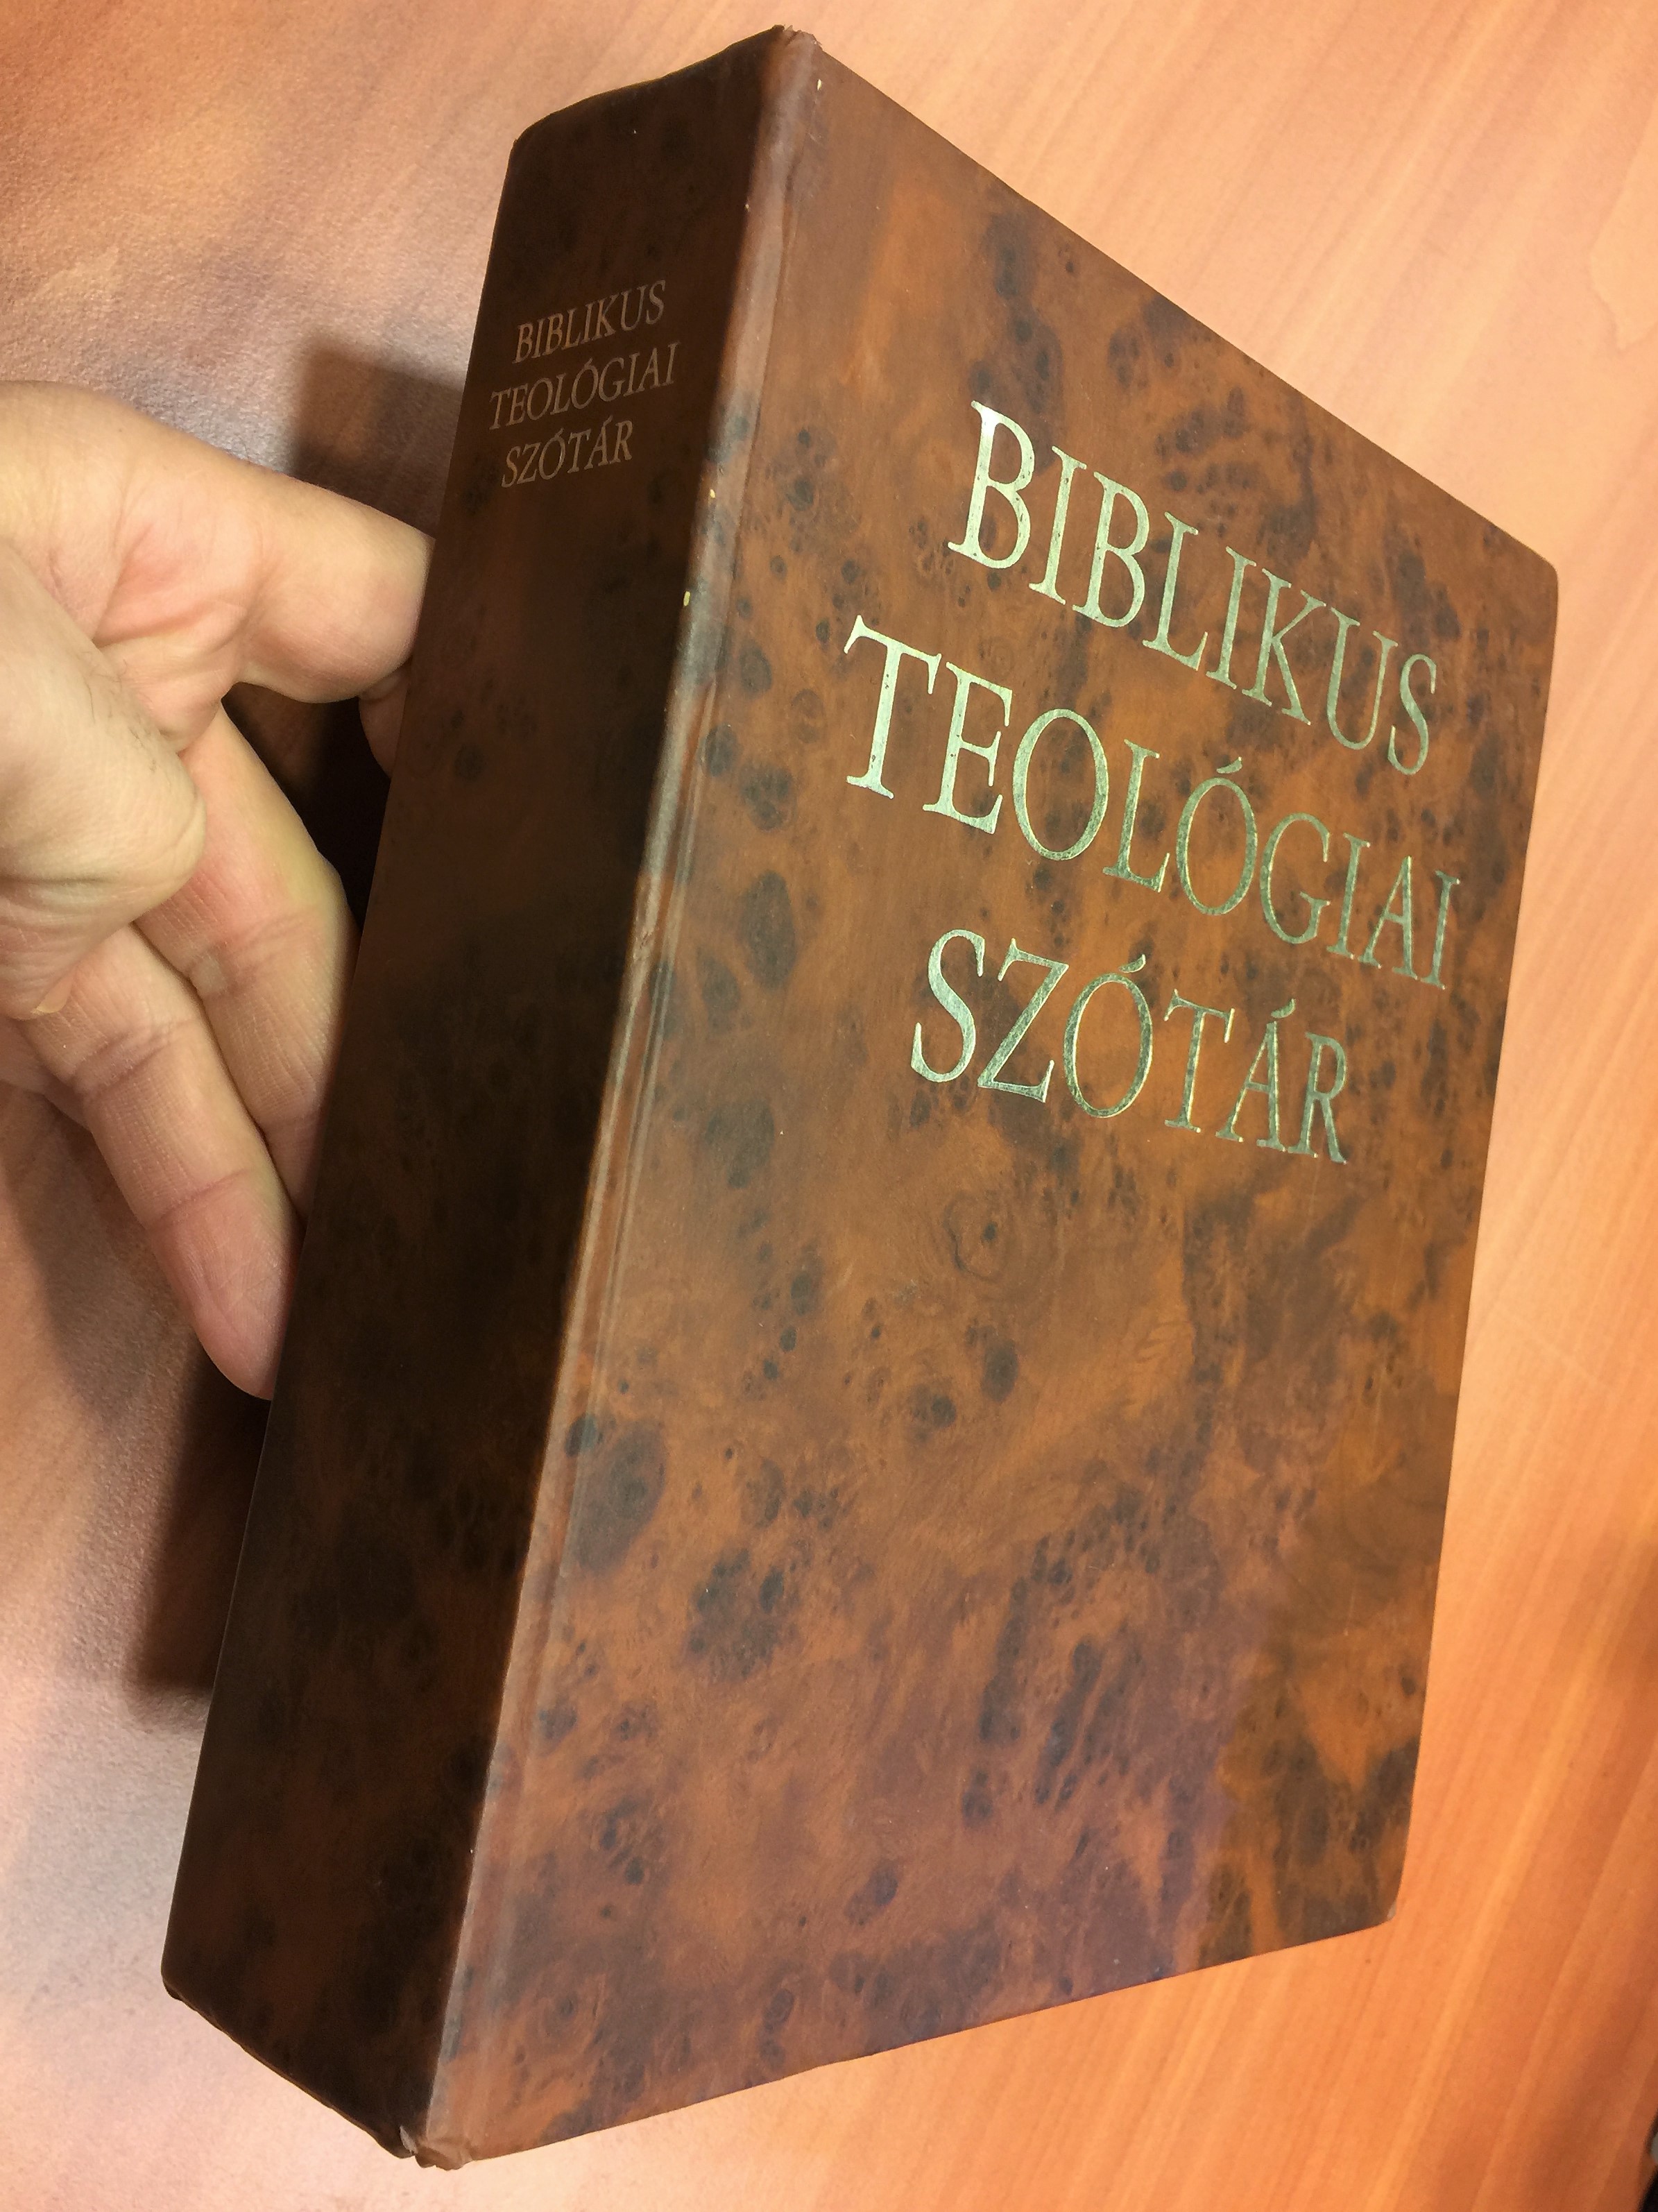 biblikus-teol-giai-sz-t-r-biblical-theology-dictionary-vocabulaire-de-th-ologie-biblique-szent-istv-n-t-rsulat-hardcover-1992-13-.jpg